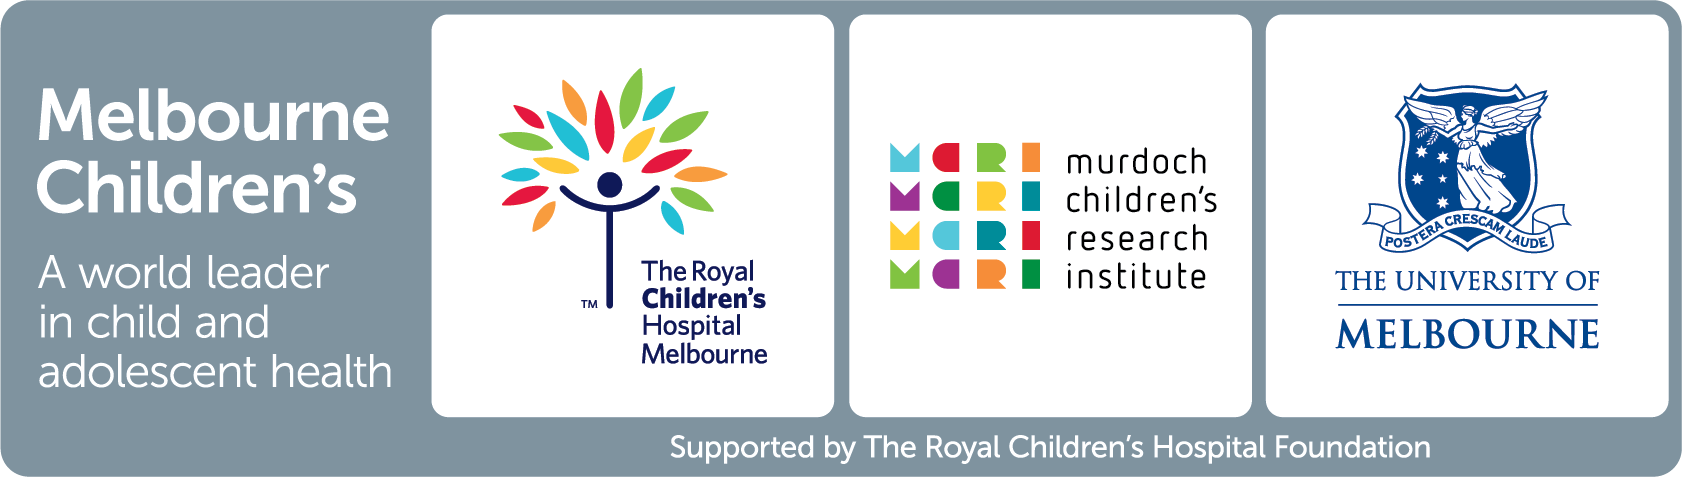 Melbourne Children's campus partners logos